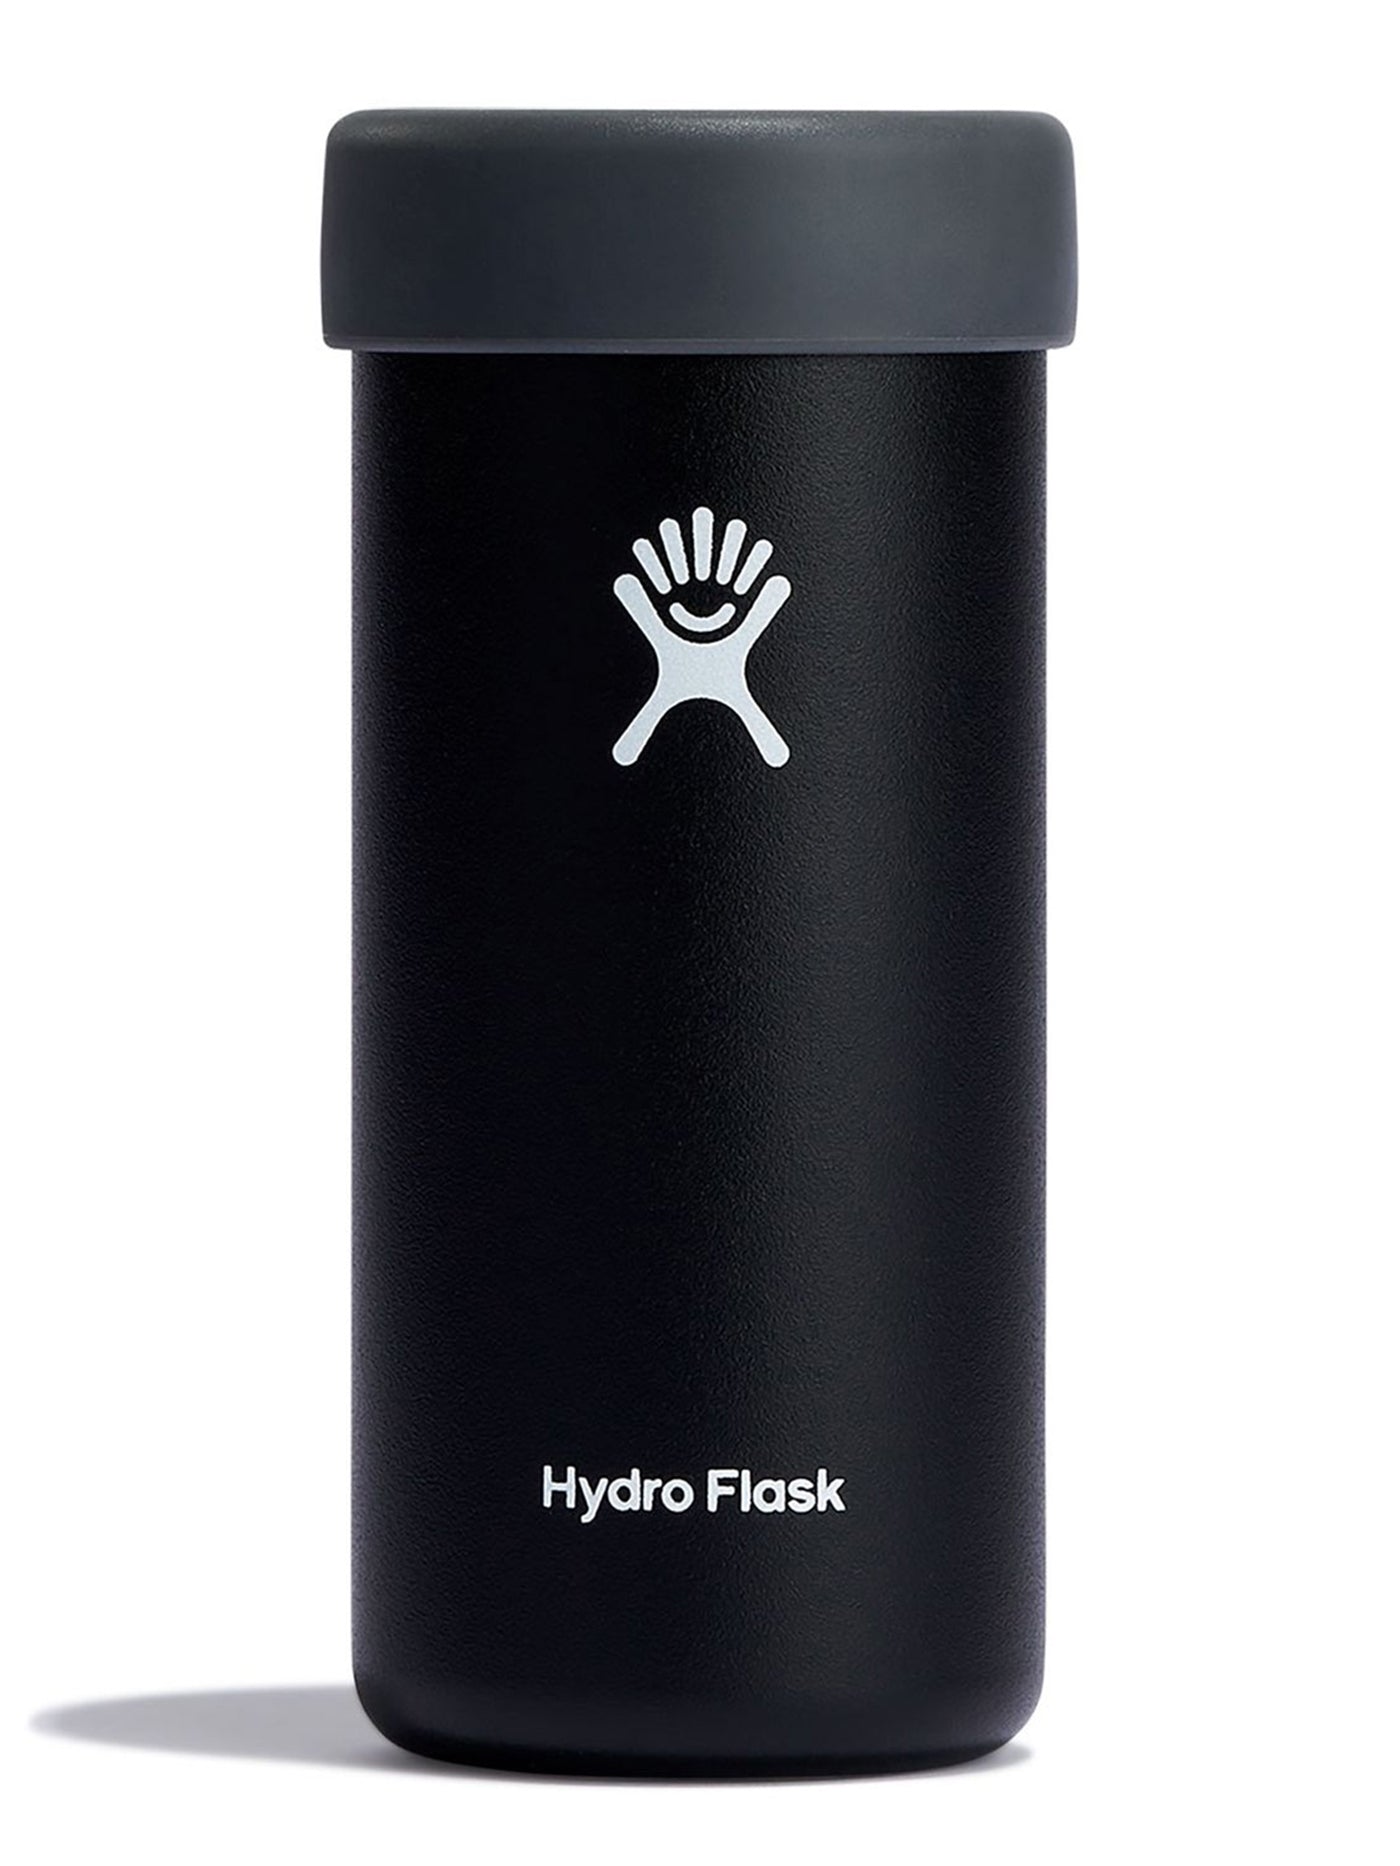 Hydro Flask 12oz Slim Black Cooler Cup